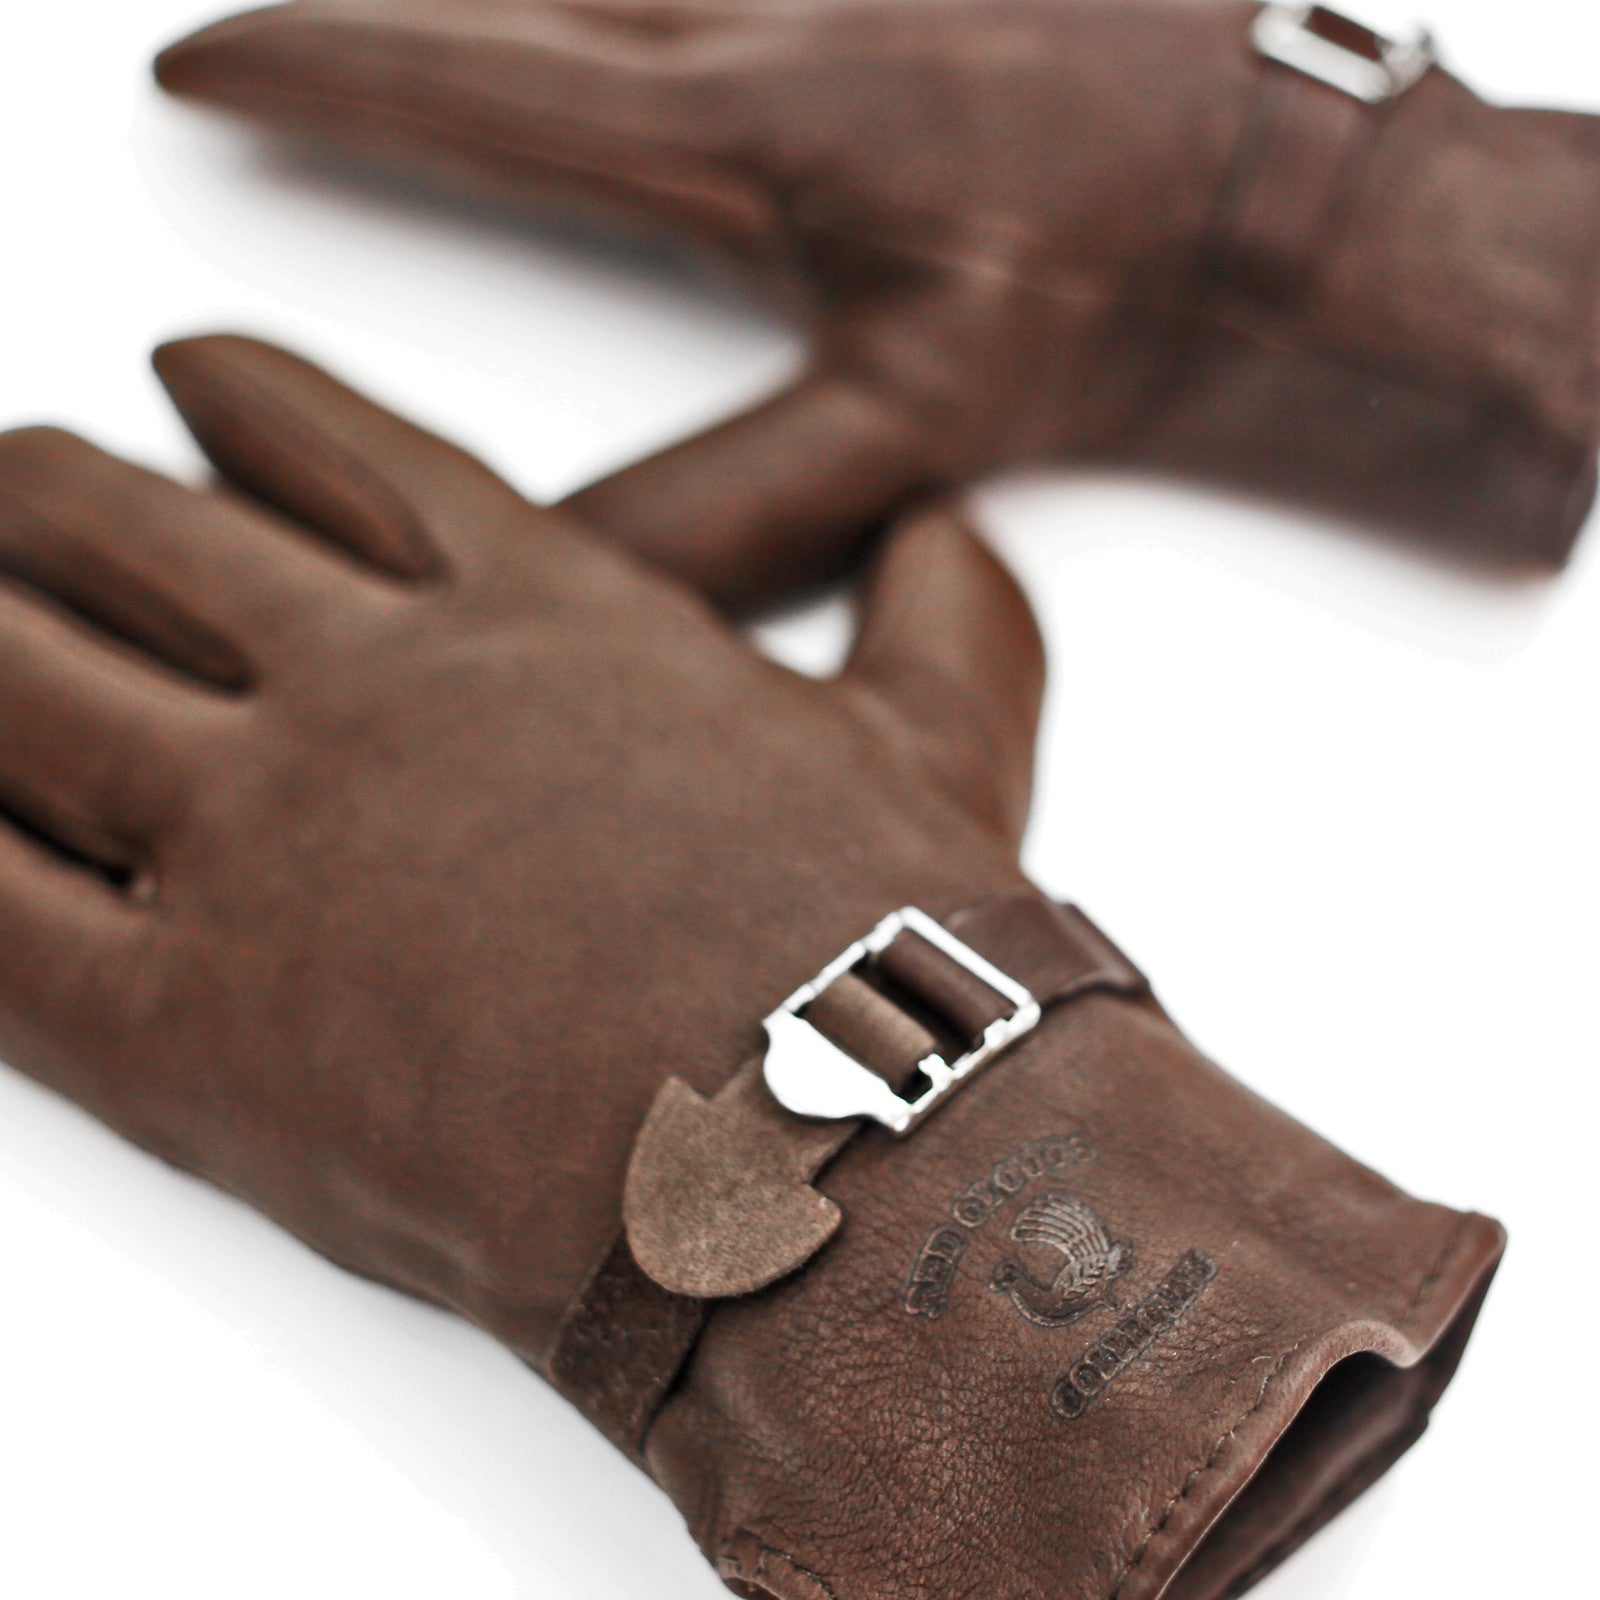 Kevlar Lined Leather Gloves - Brown